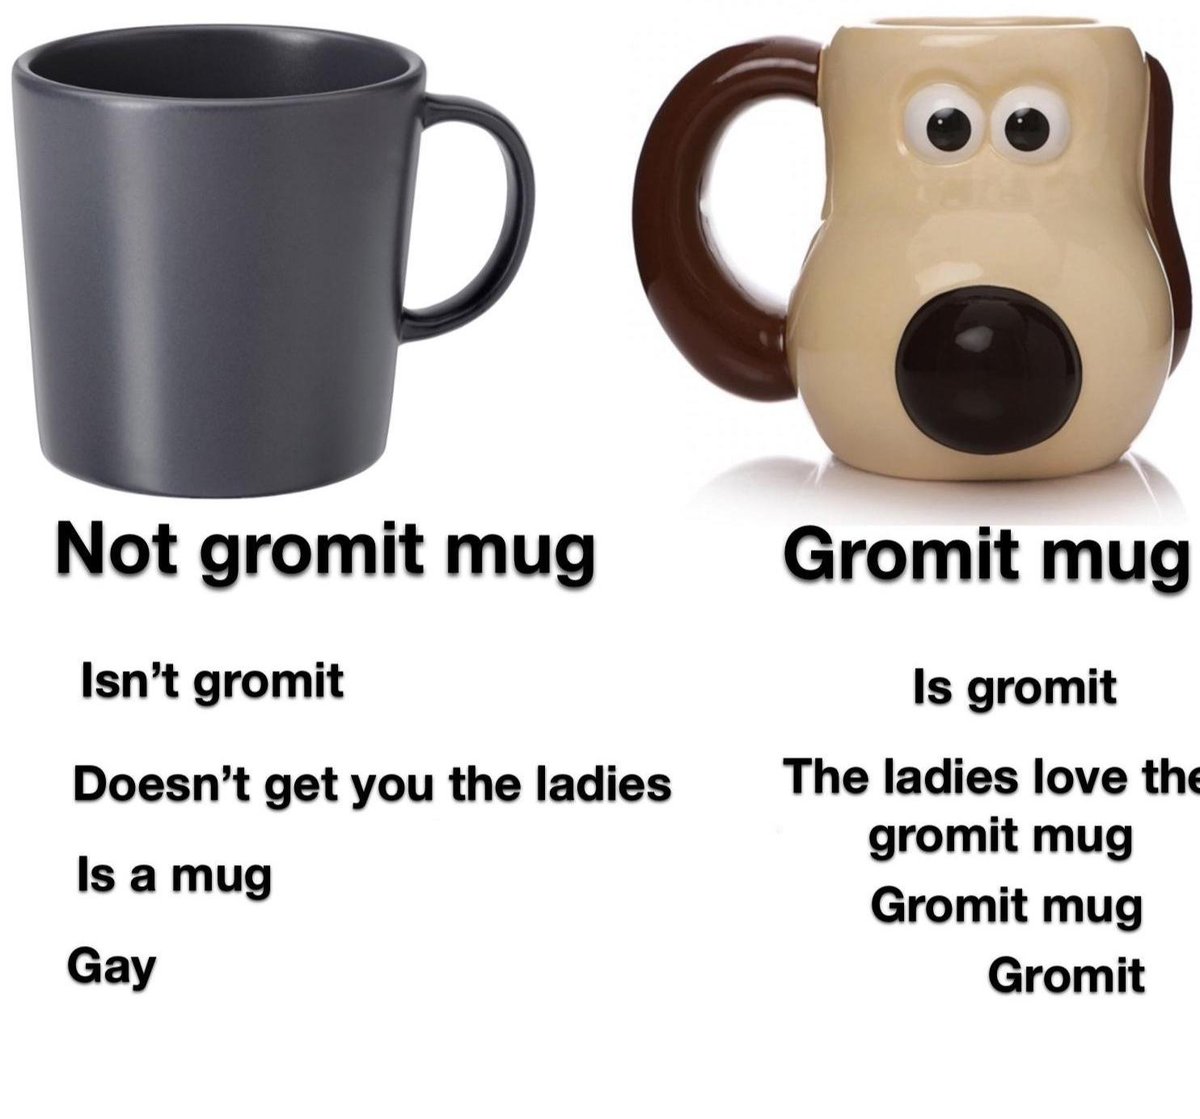 Buy Gromit mug instead